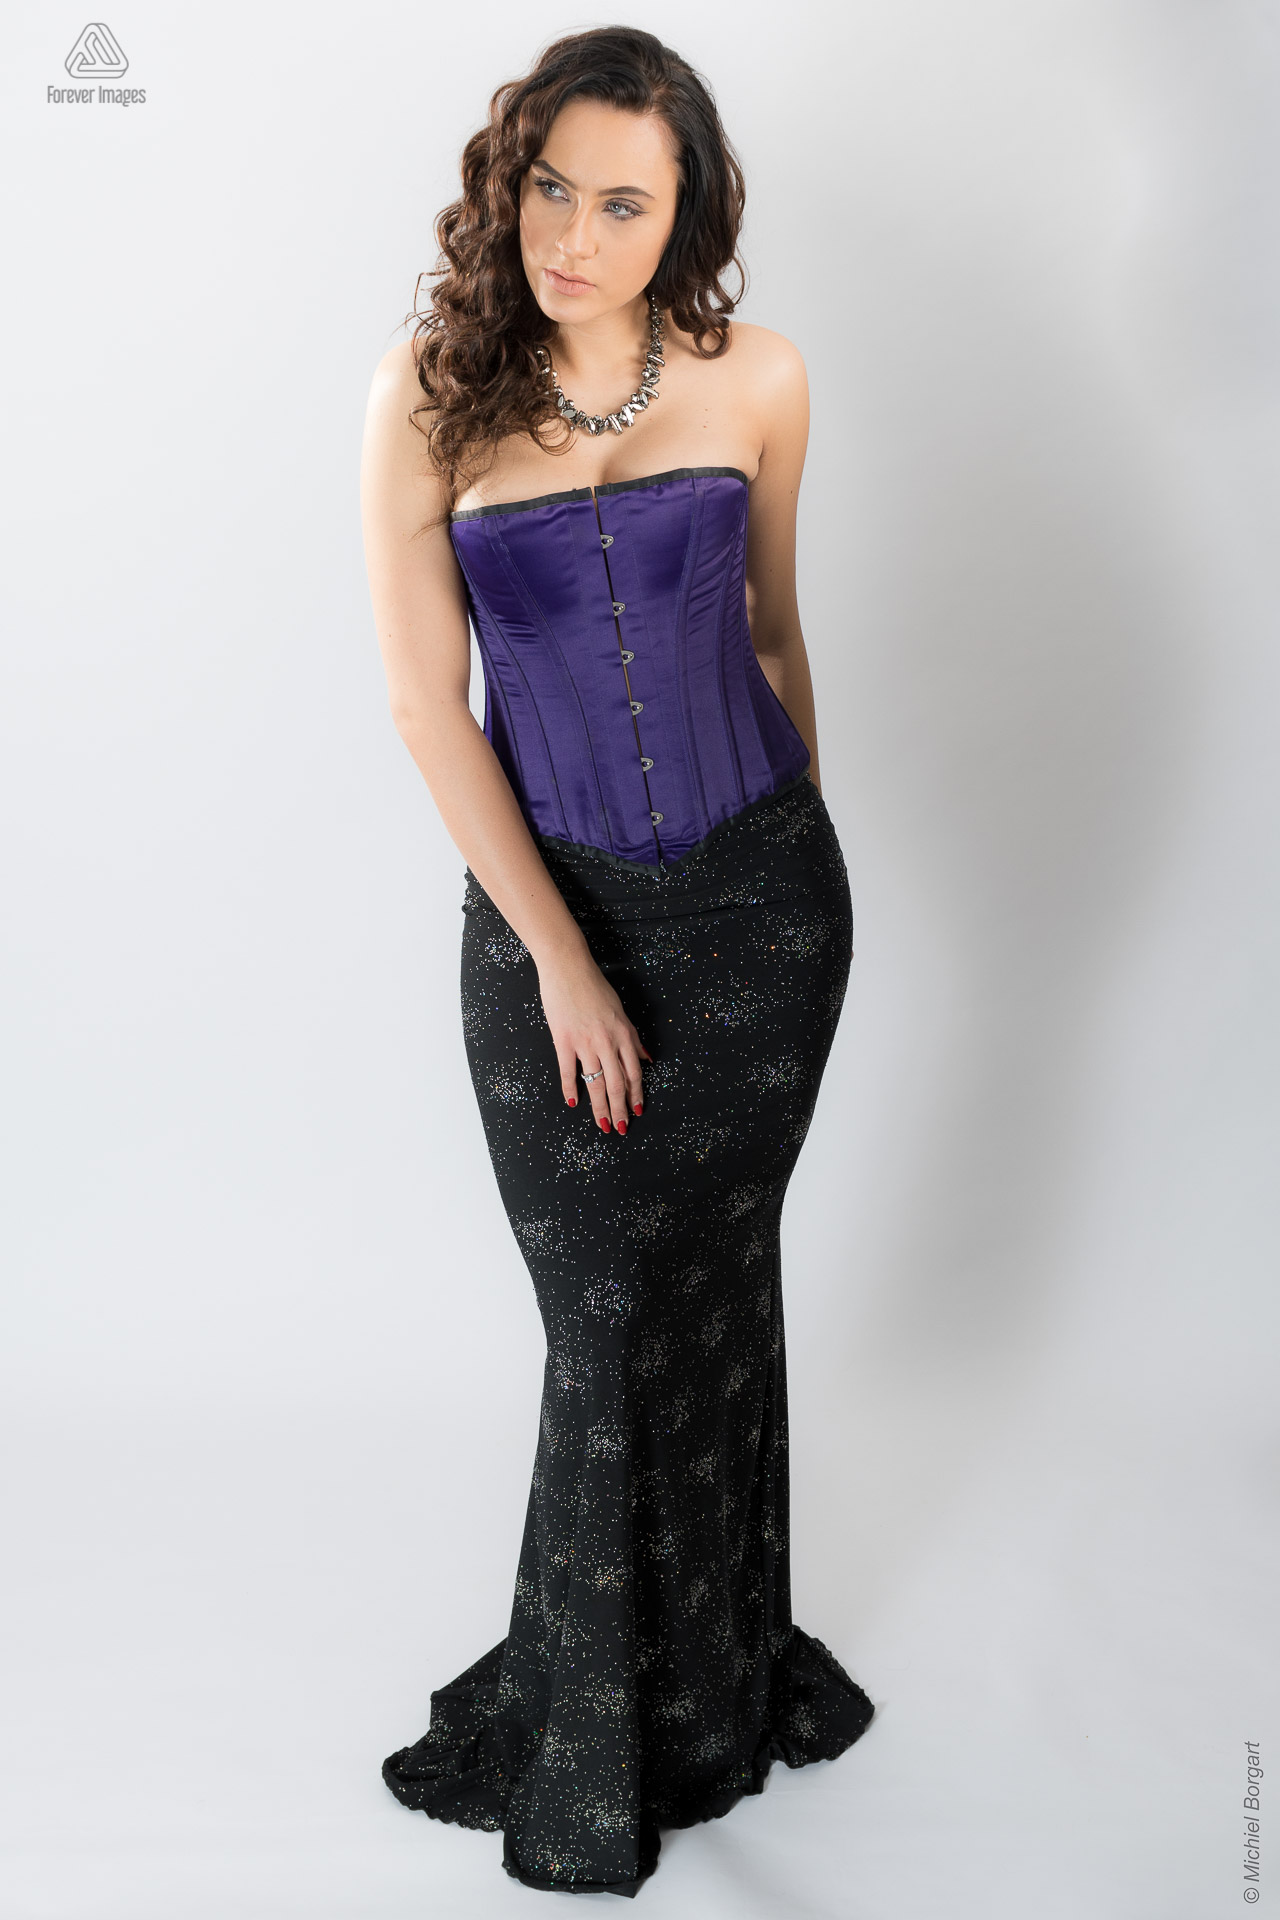 Fashion purple corset skirt black | Judith de Wilde de Ligny Miss Eco Netherlands Vicky Foundation | Fashion Photographer Michiel Borgart - Forever Images.